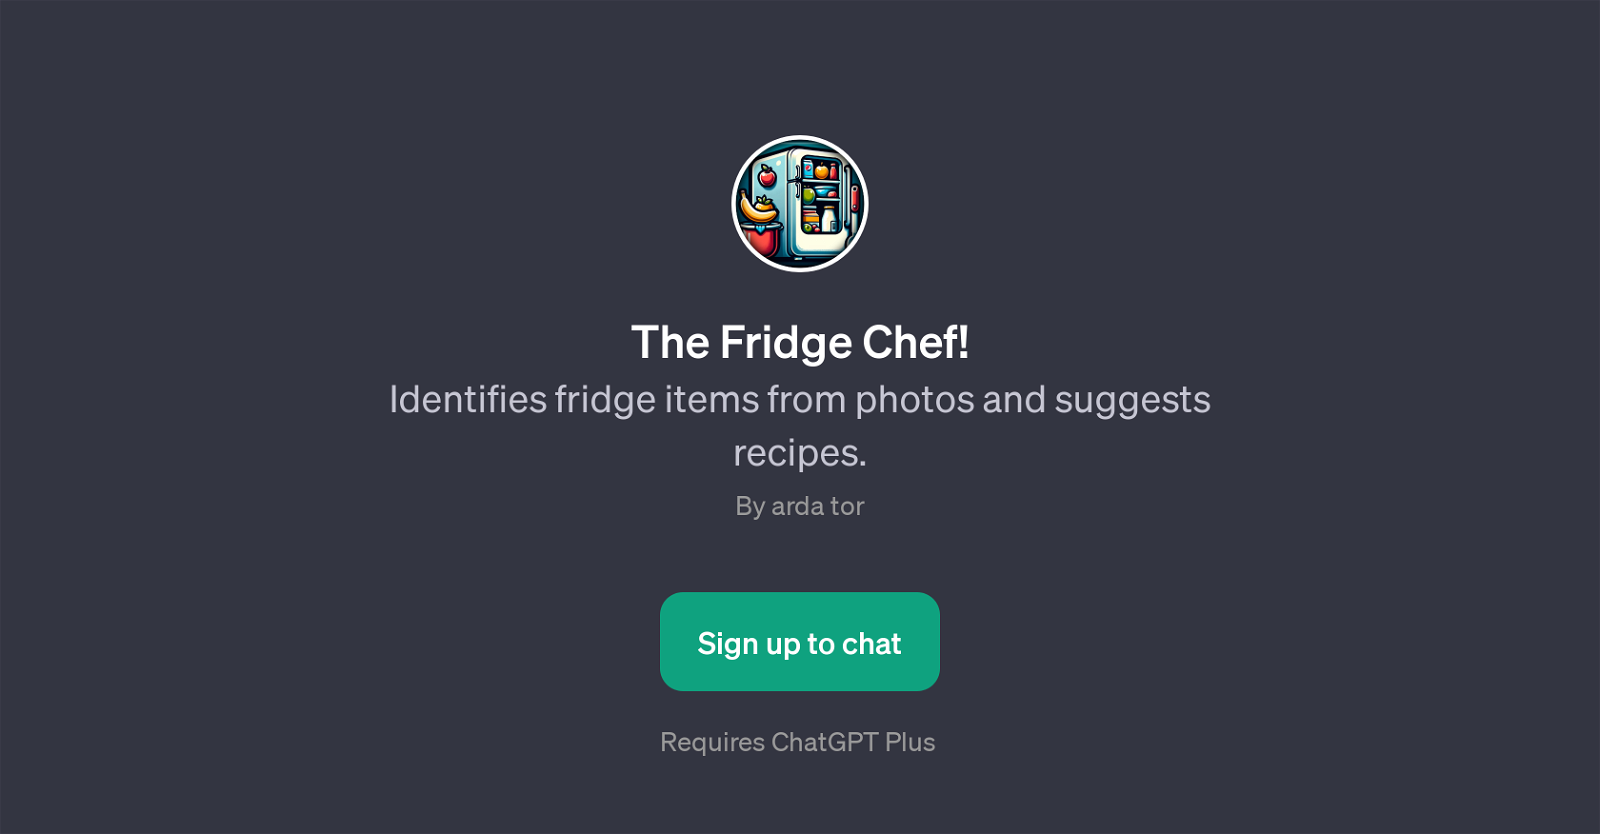 The Fridge Chef website